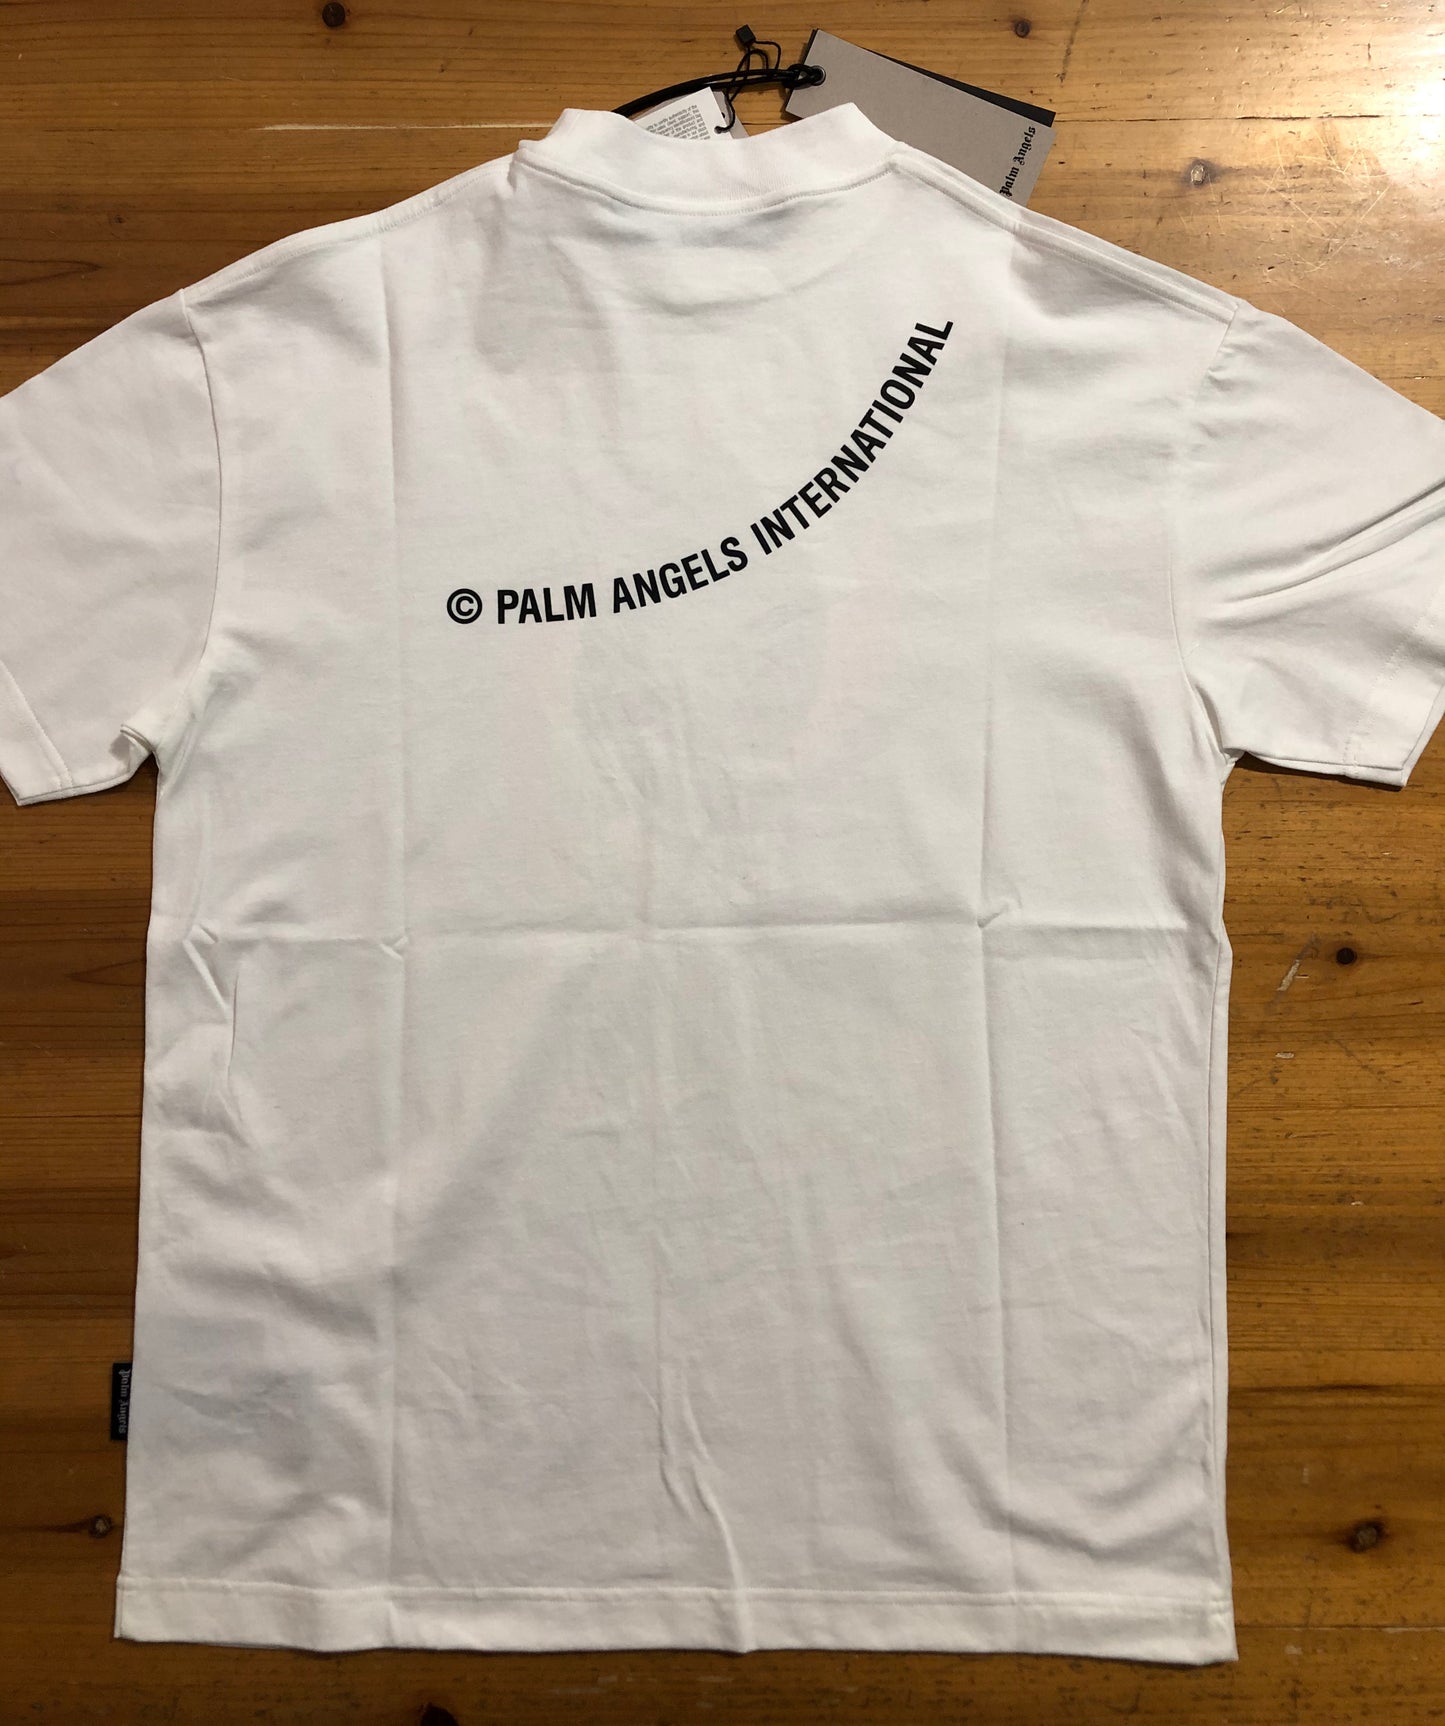 Palm Angels 'Hurricane' T-shirt